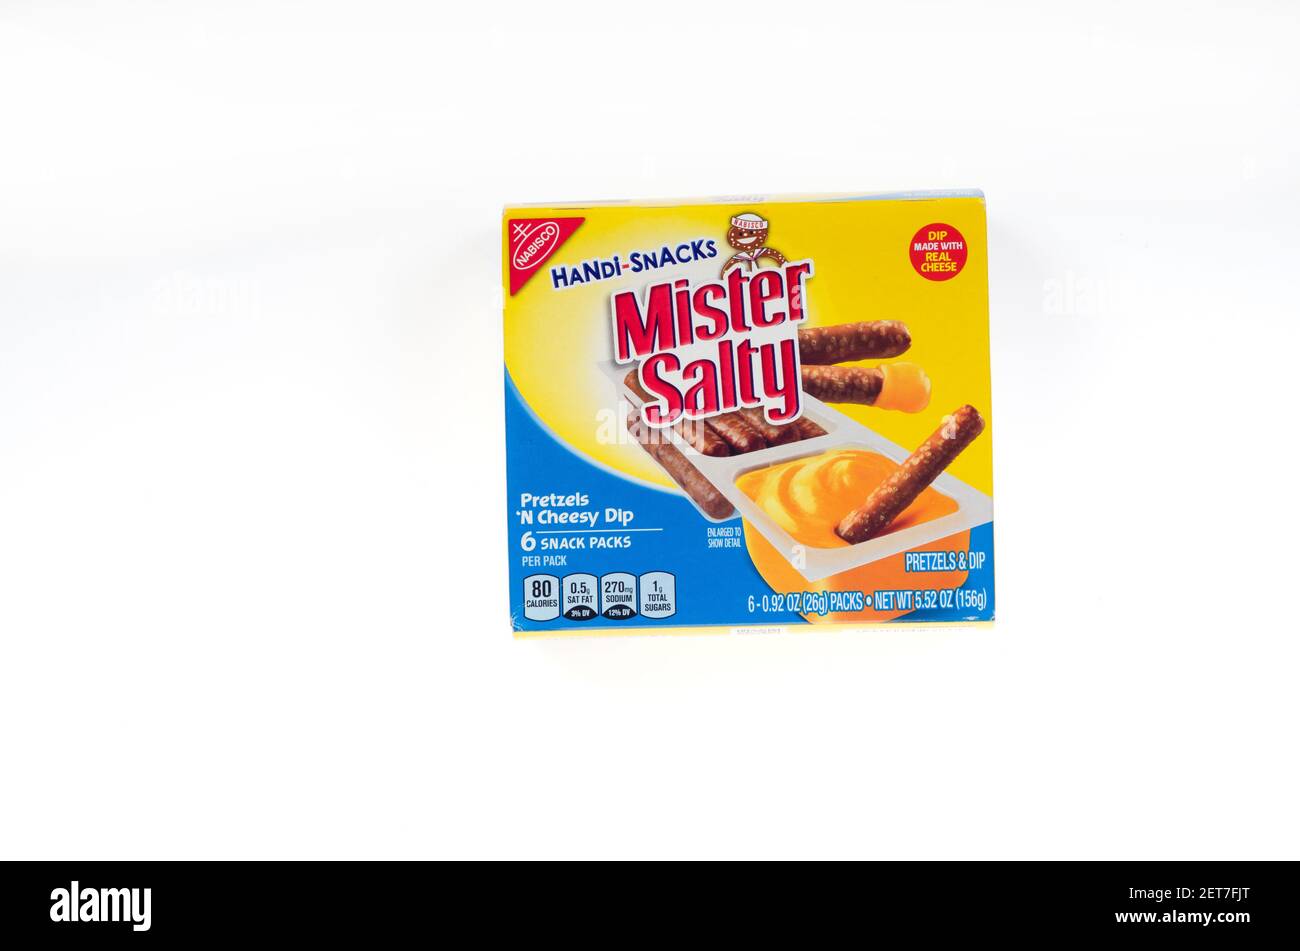 Mister Salty Pretzels & Cheese Handi Snacks Snack Packs Box by Nabisco Stock Photo